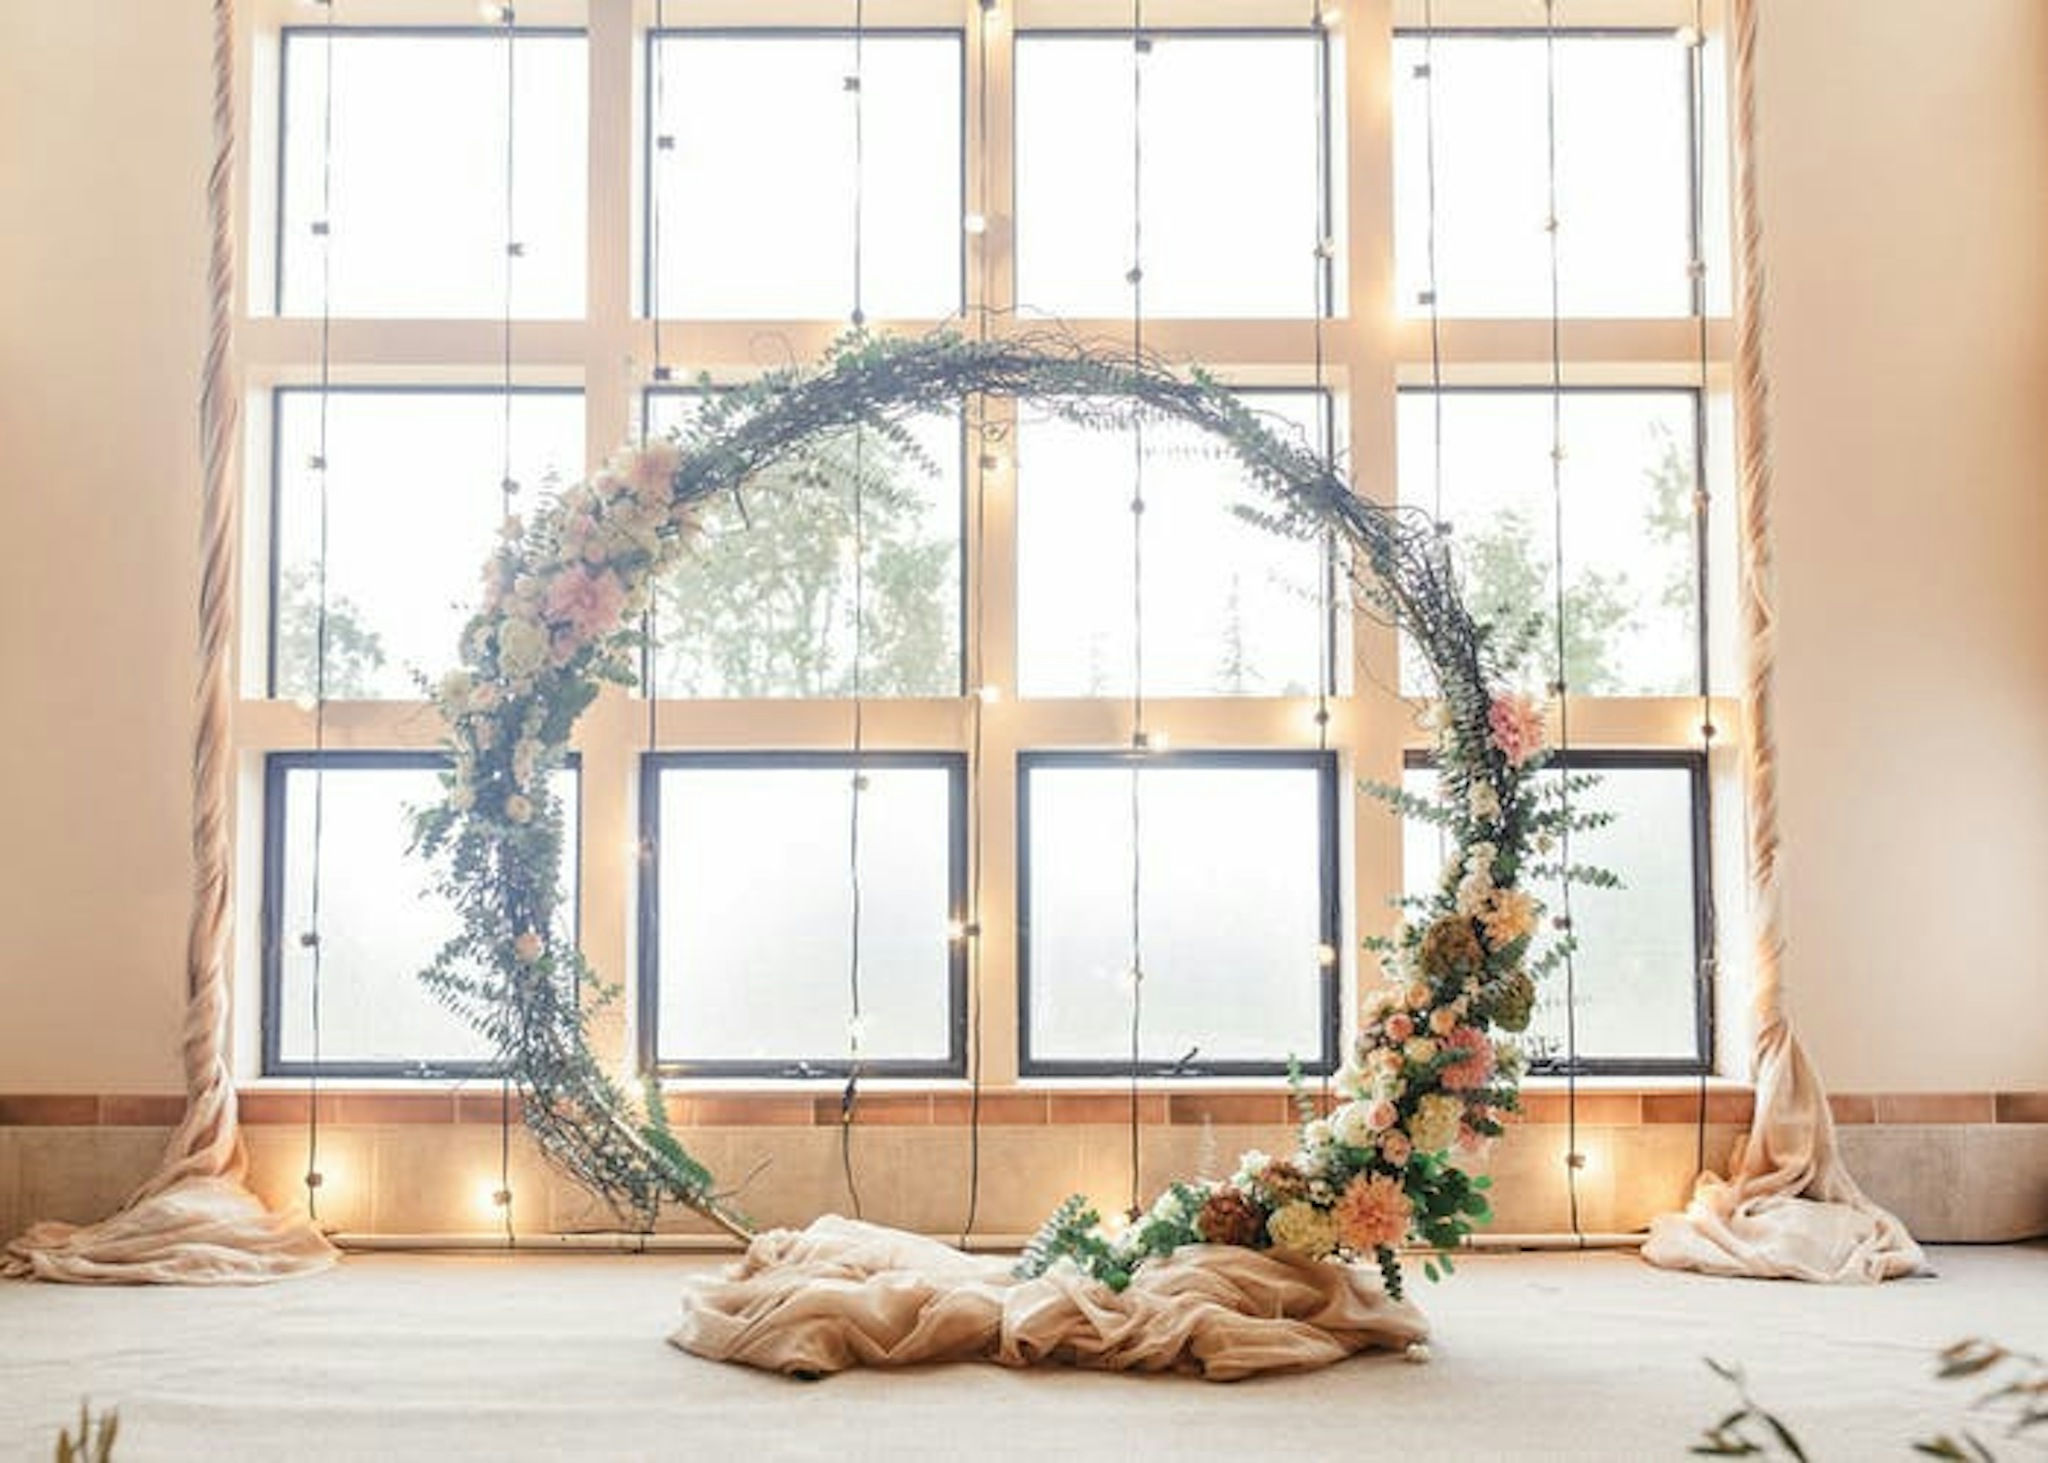 Circular wedding arch